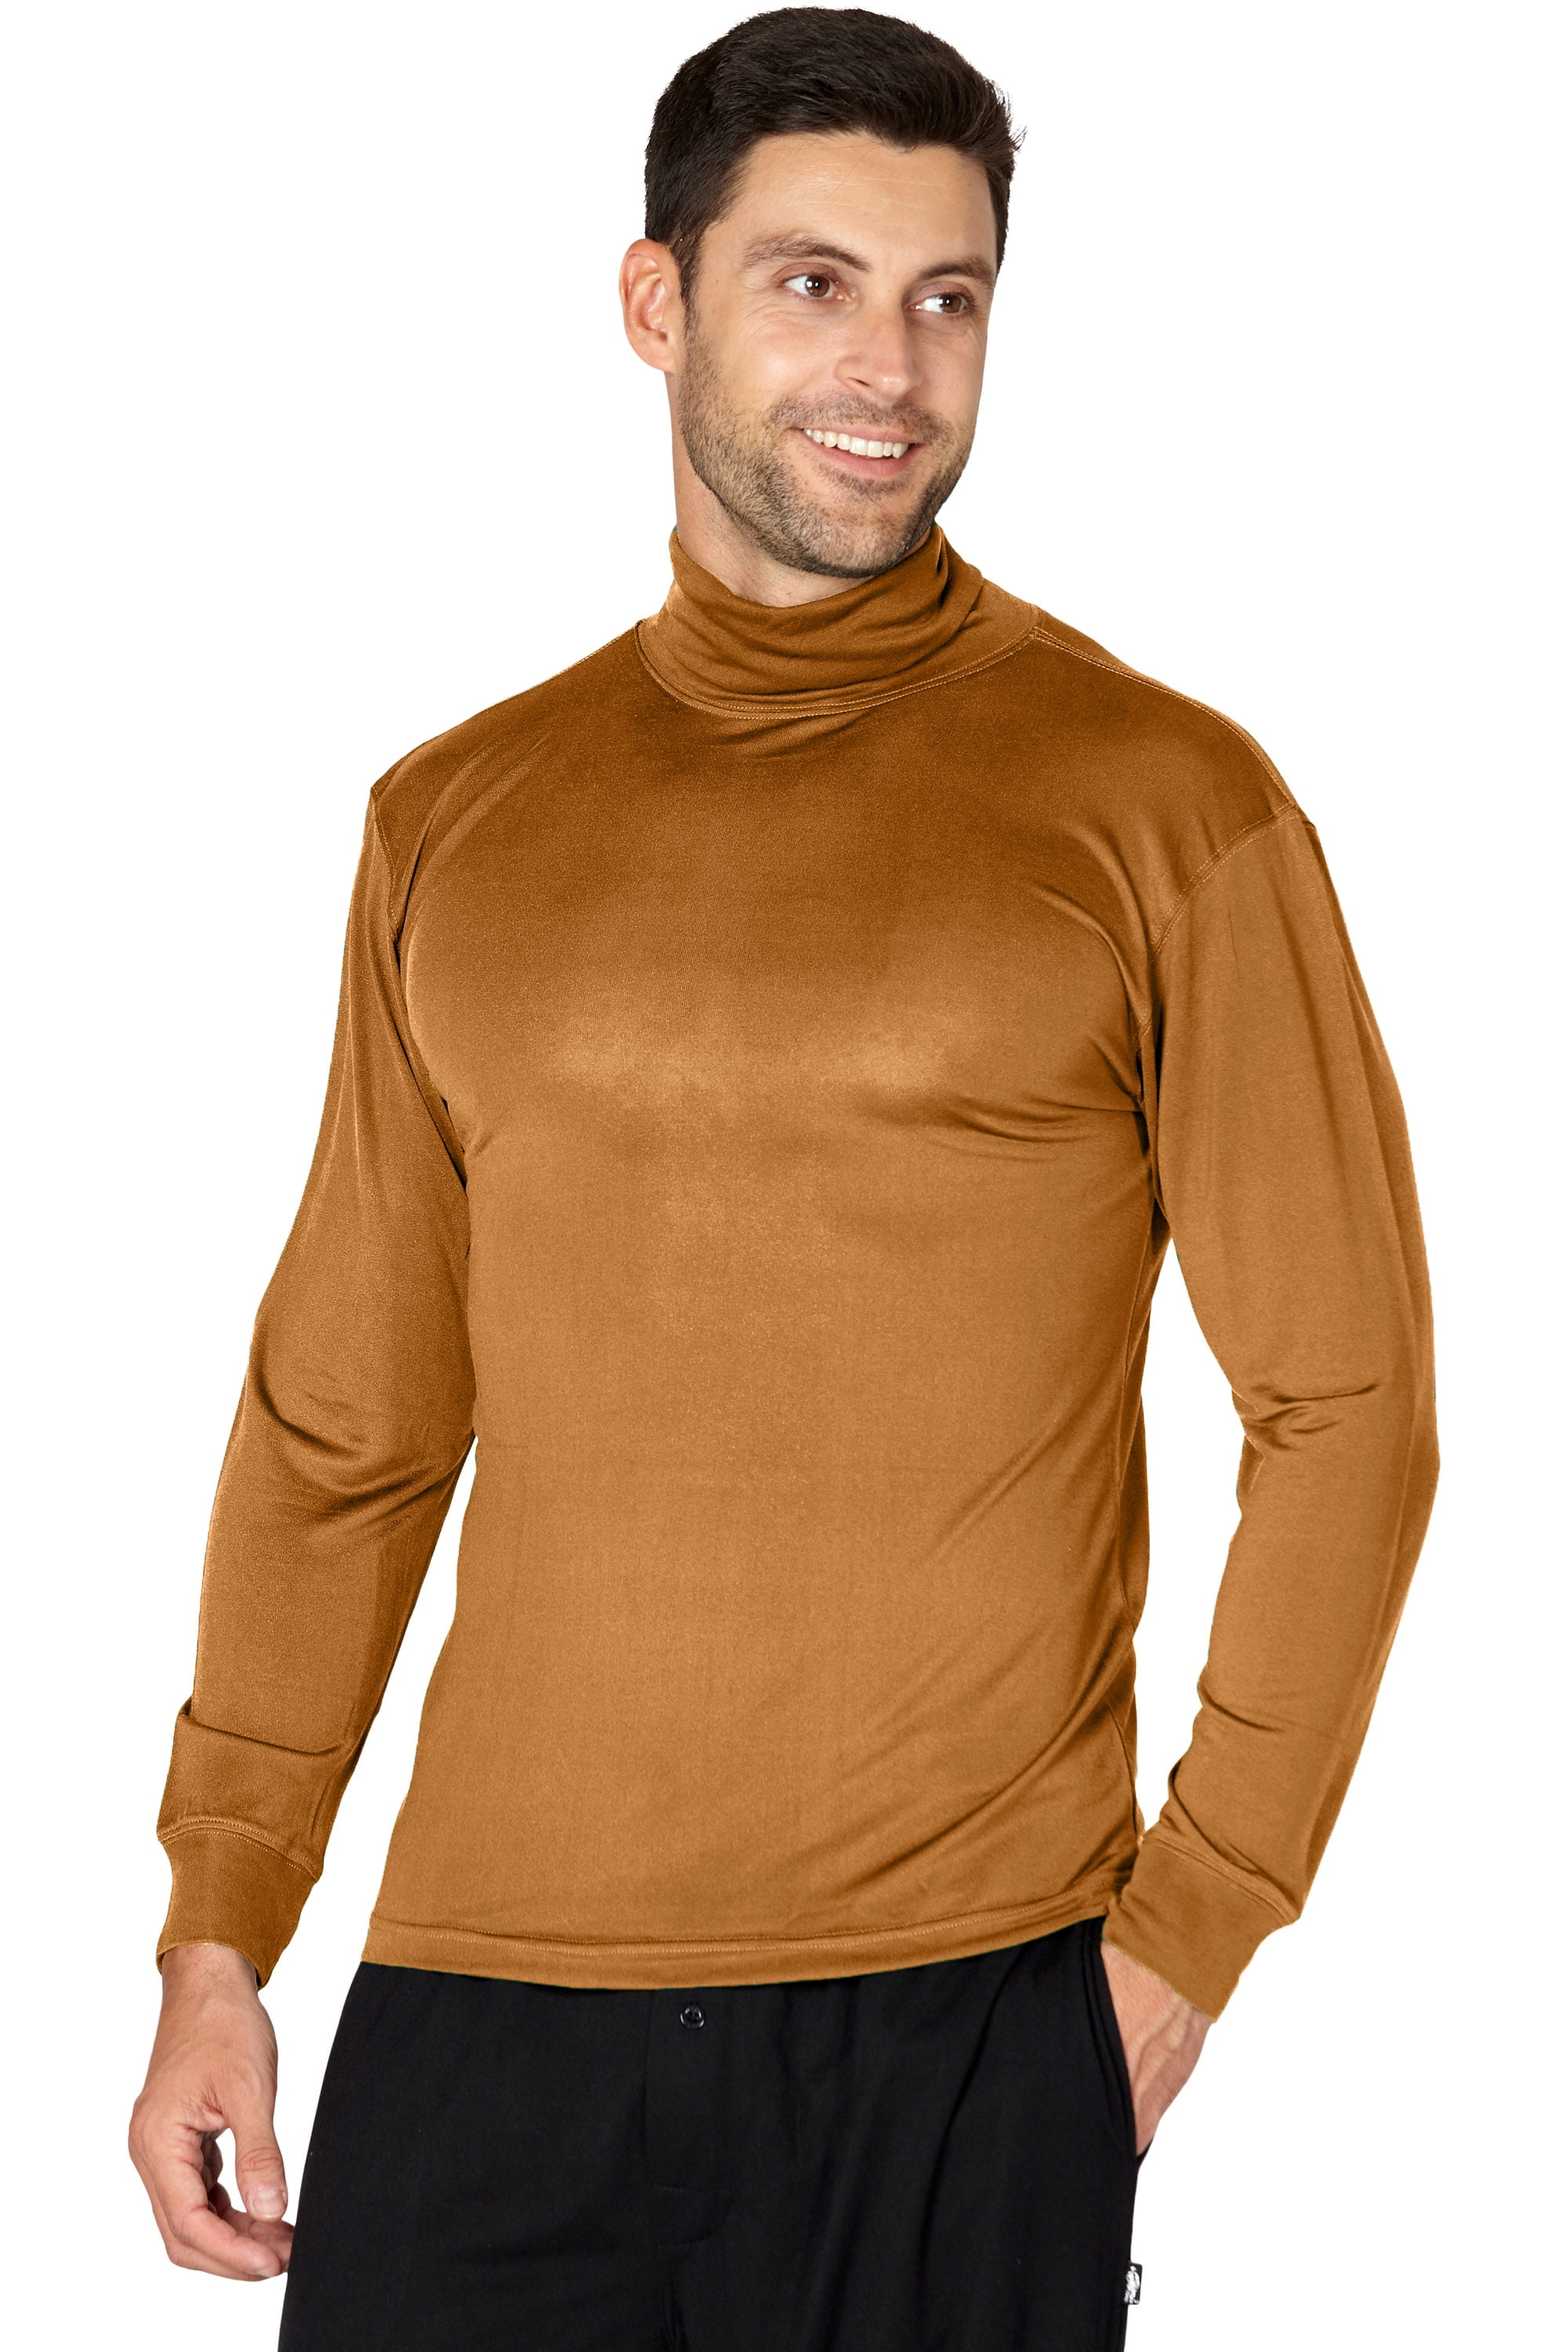 Men's Silk Unisex Fold Over Turtleneck Long Sleeve Shirt - Walmart.com